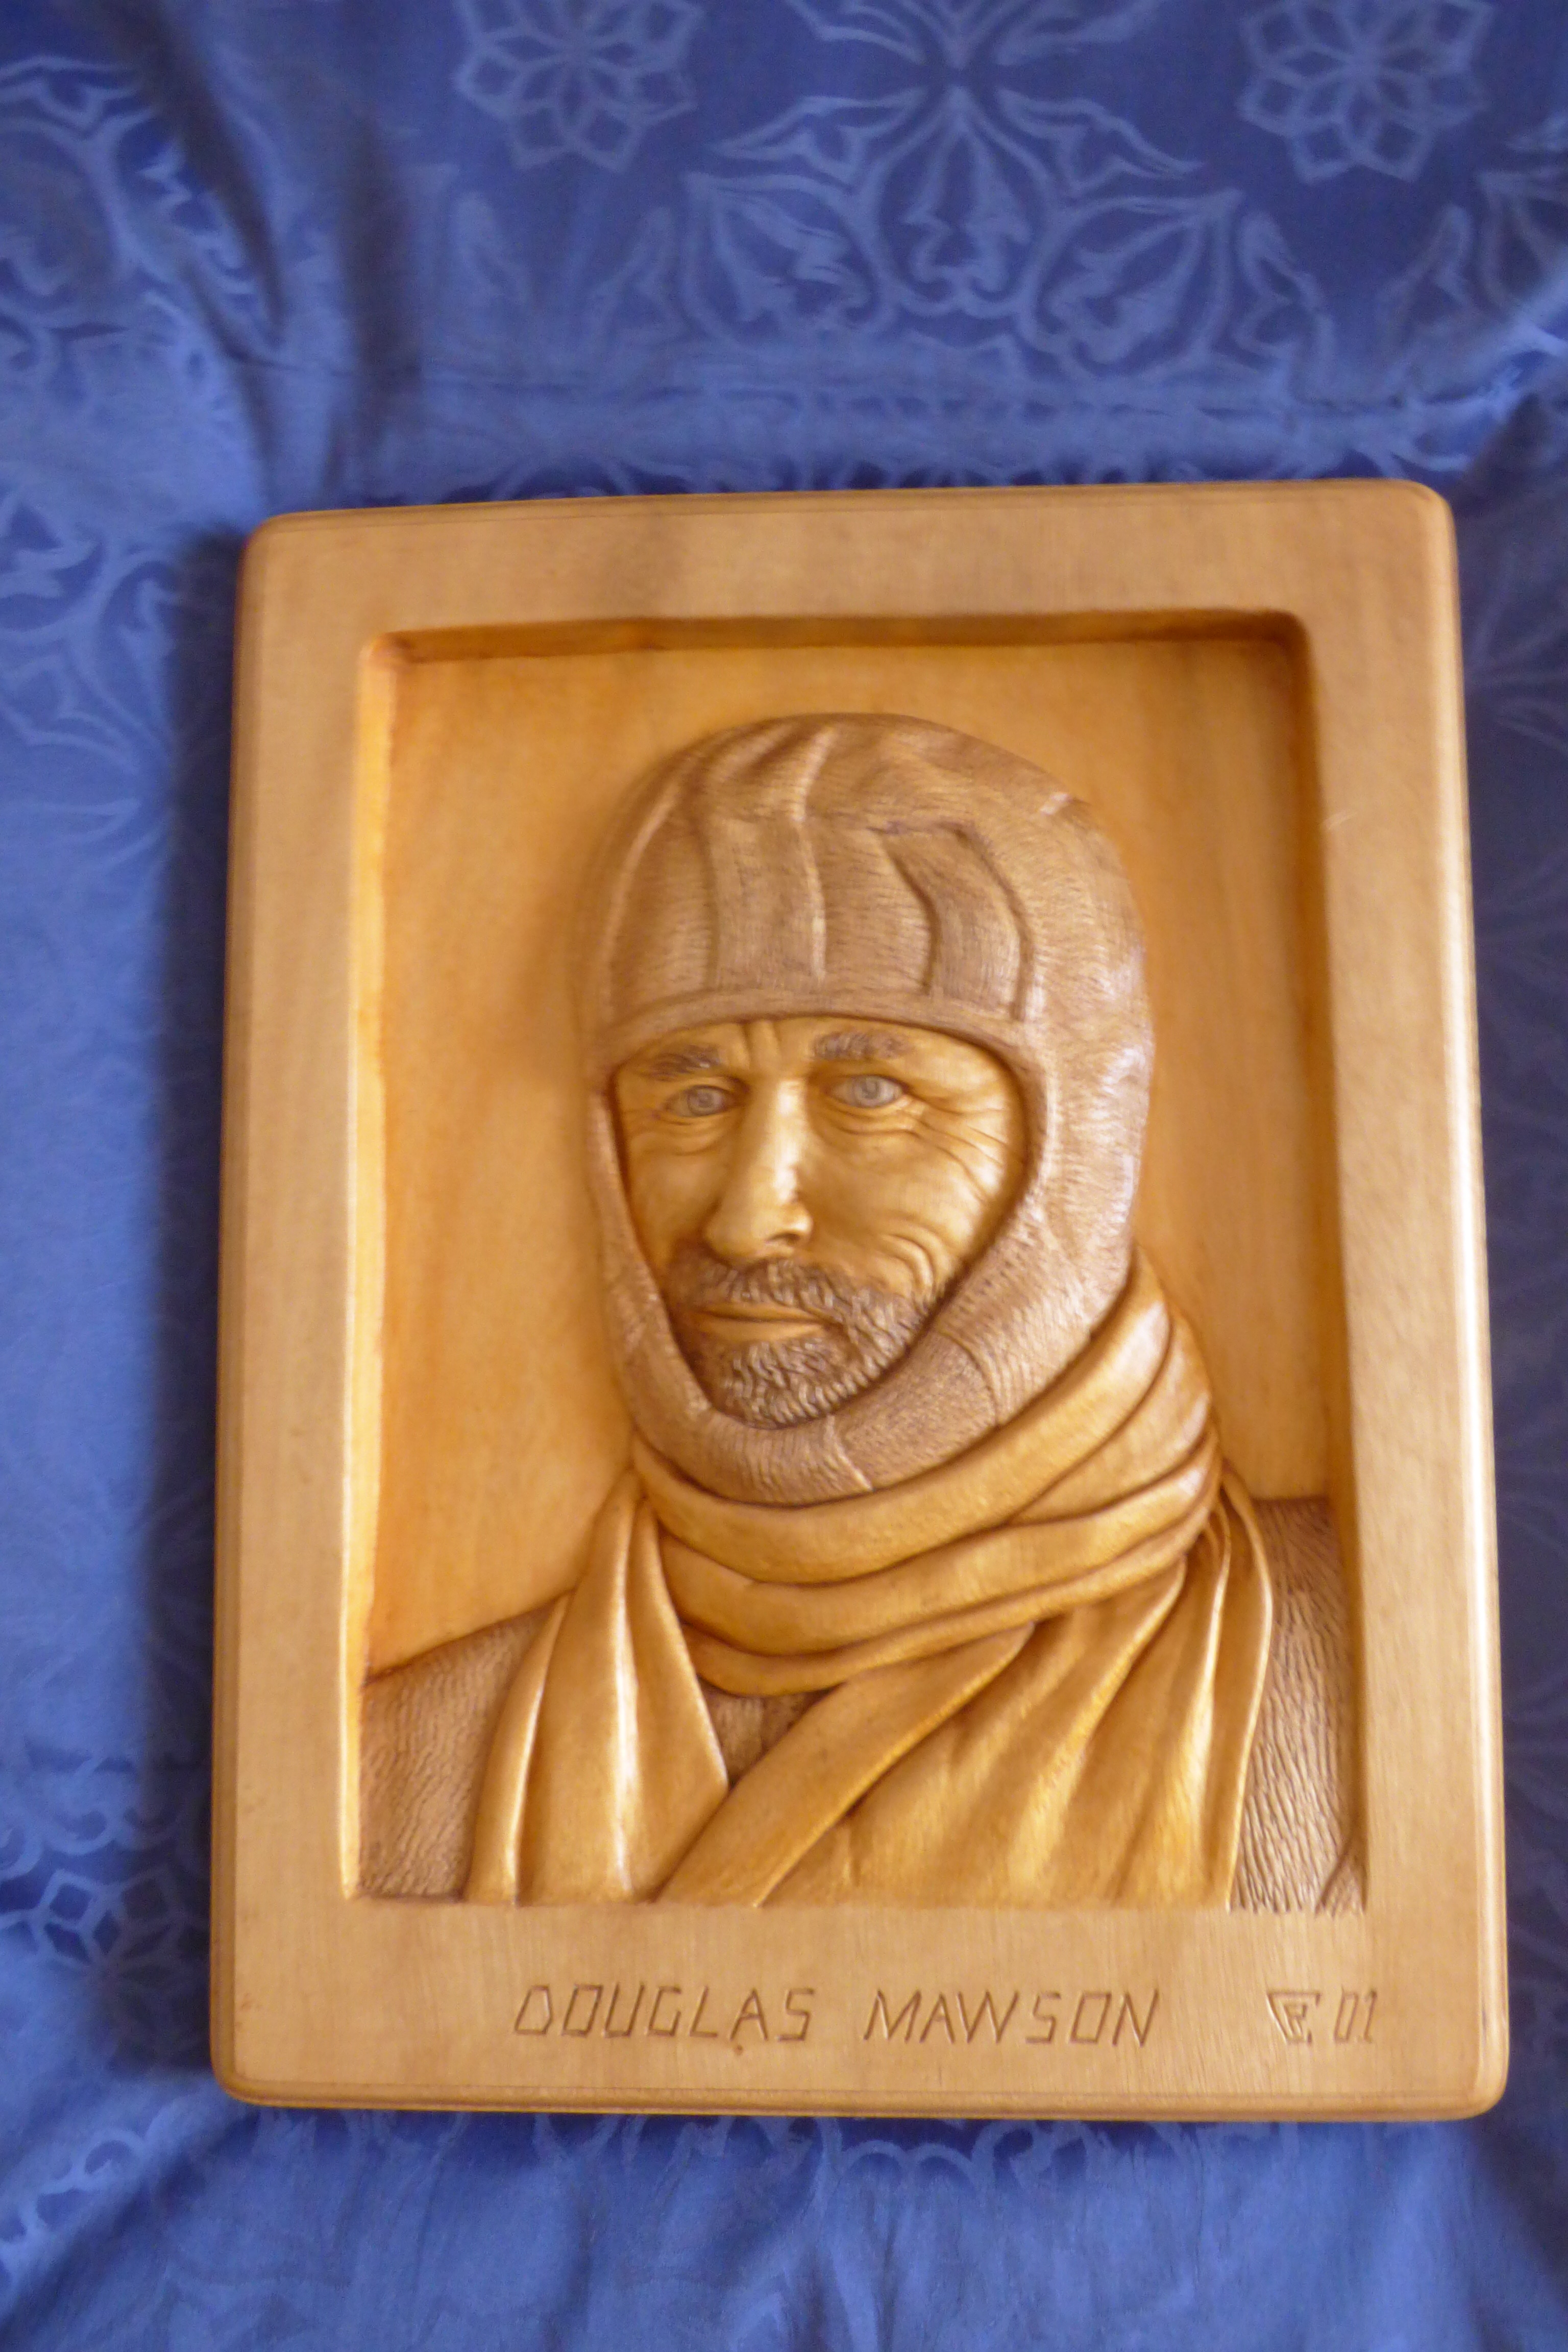 Relief carving of Douglas Mawson